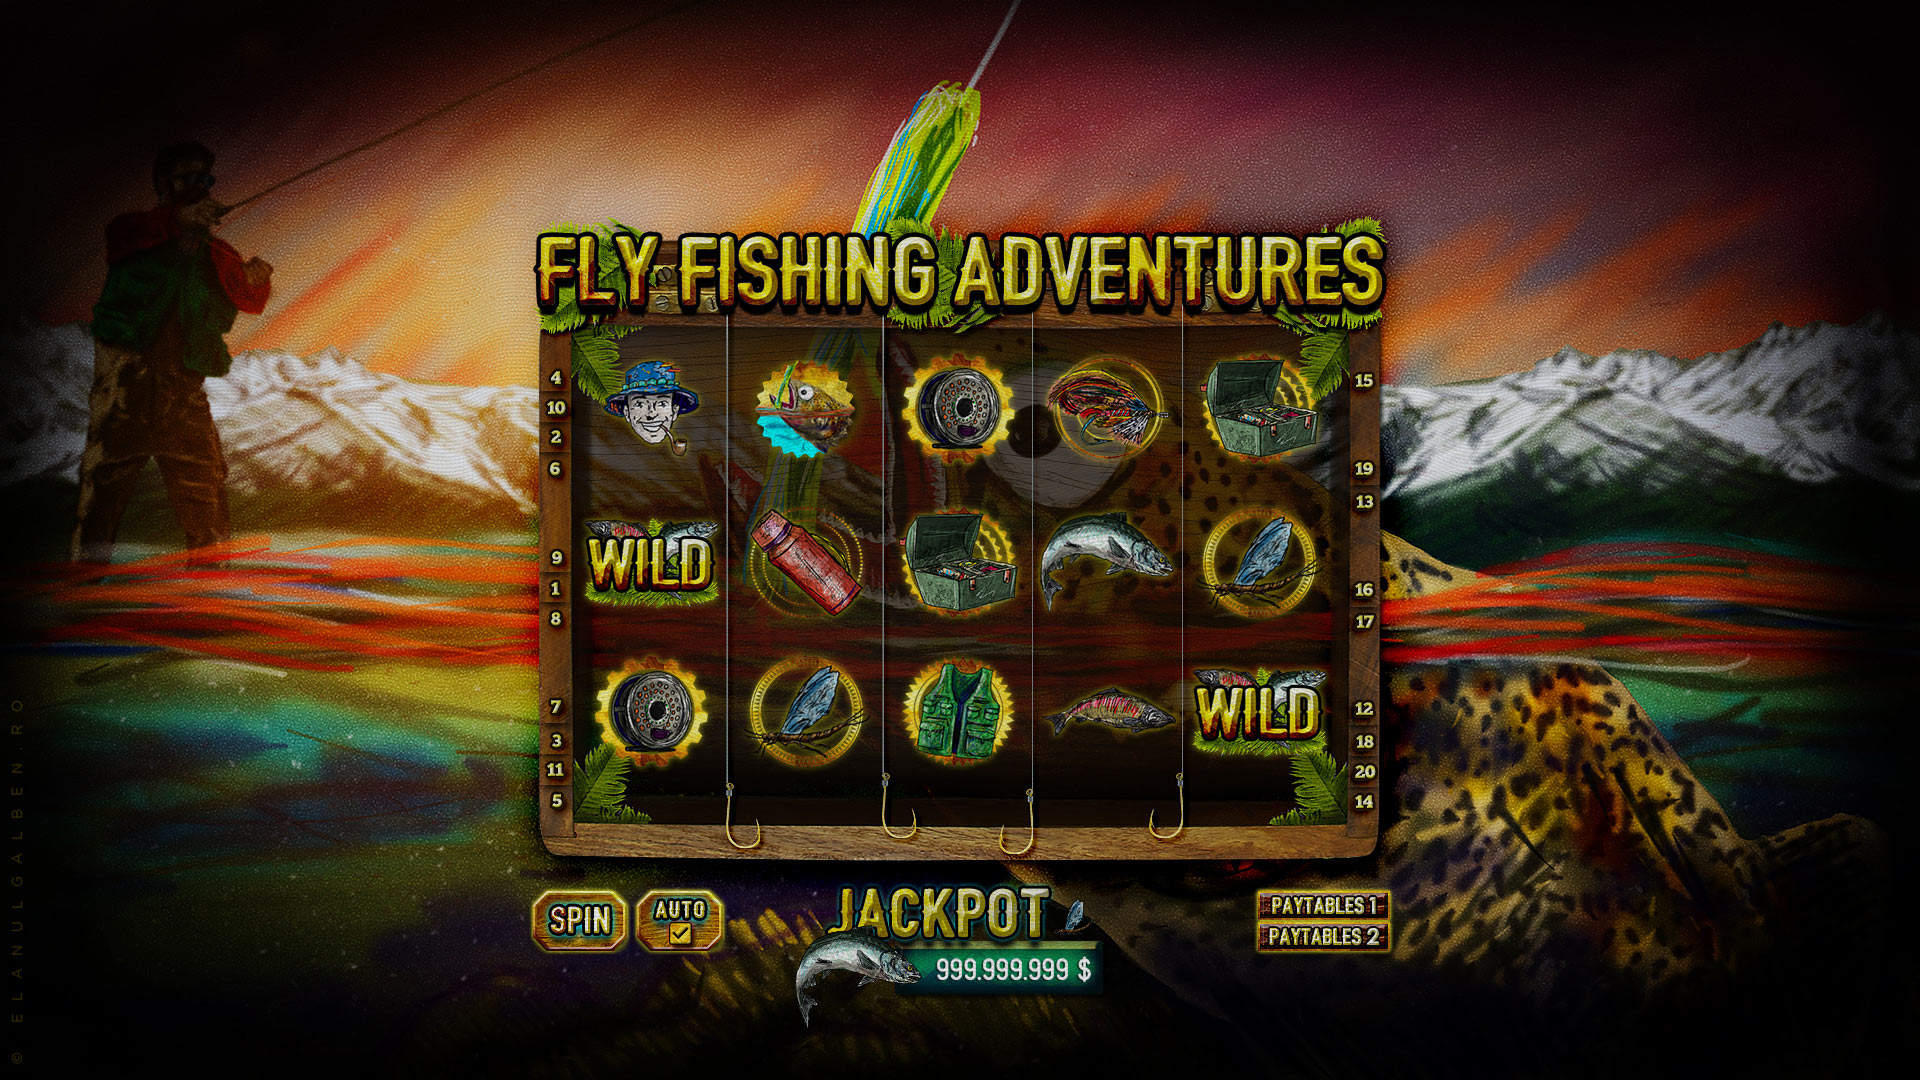 Online Casino Game Design - Slot machine game - Fly Fishing Adventures